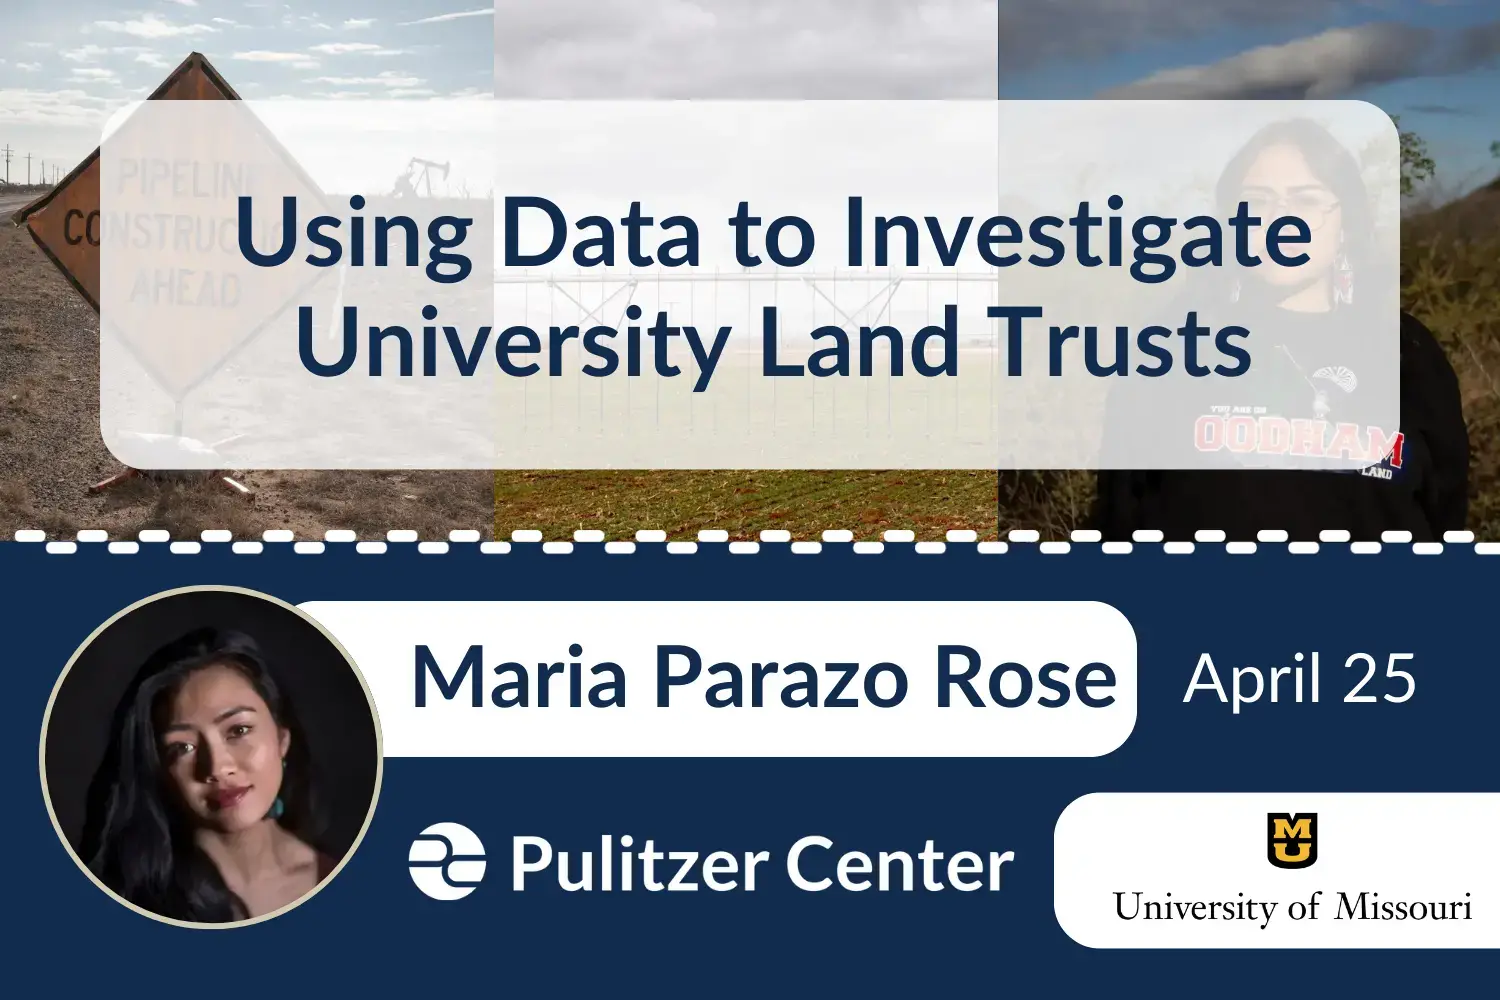 Using Data to Investigate University Land Trusts: Maria Parazo Rose at University of Missouri April 25